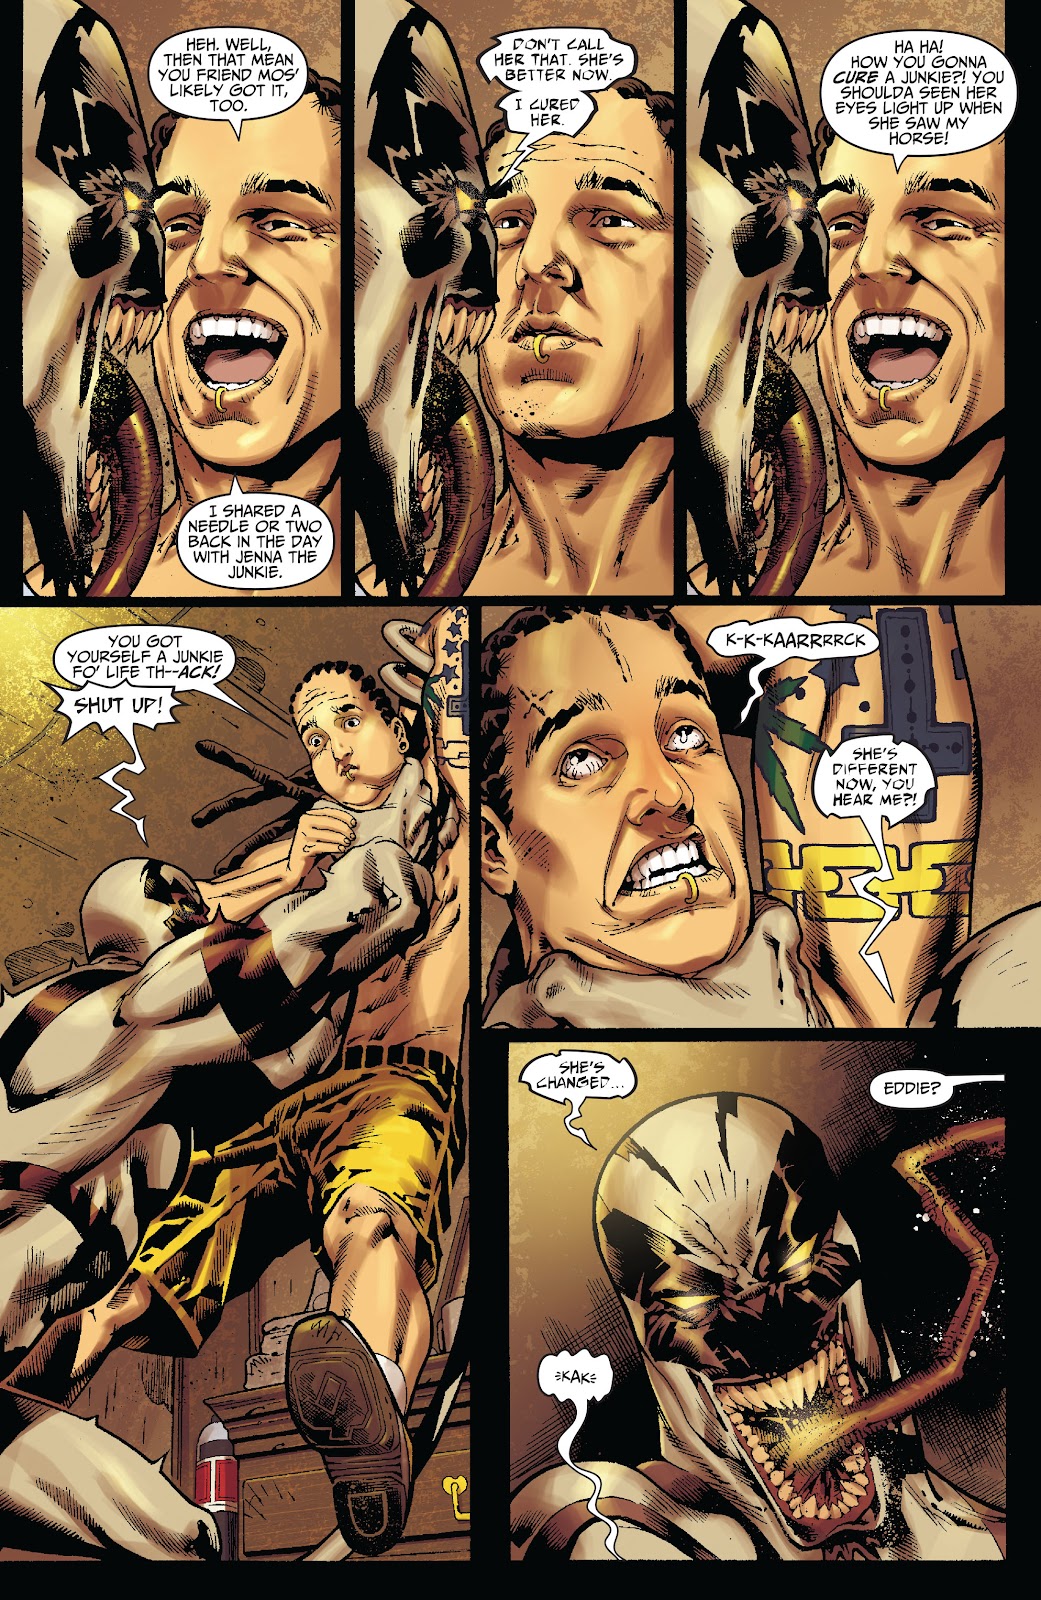 Amazing Spider-Man Presents: Anti-Venom - New Ways To Live issue 1 - Page 11